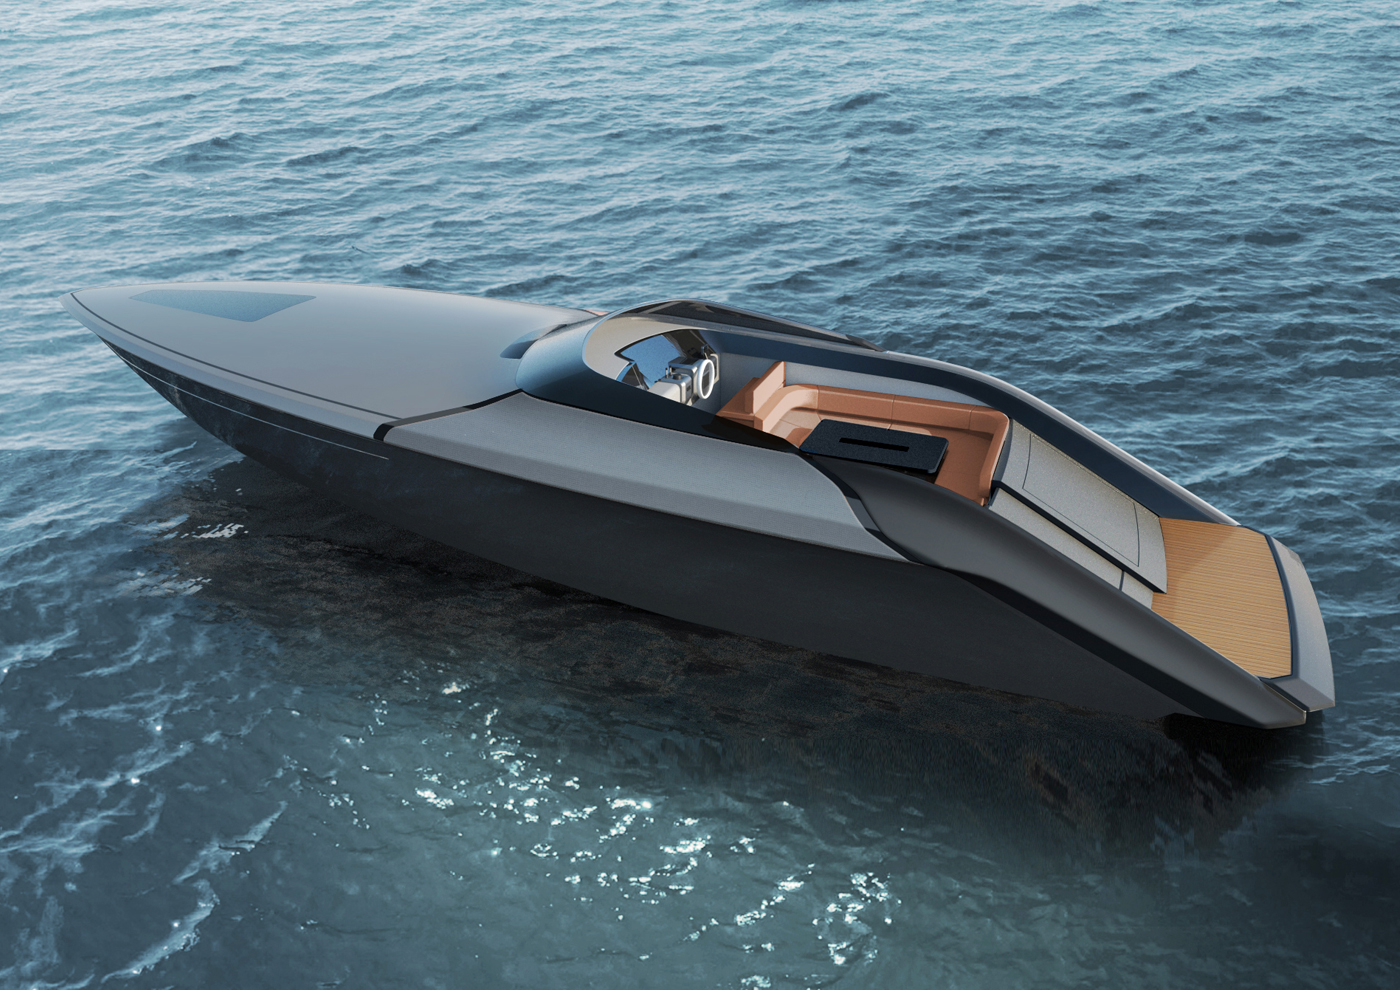 Yacht design - 40 Feet - Power boat - Final exterior2a - Davide Mezzasalma - Furniture design - Berlin